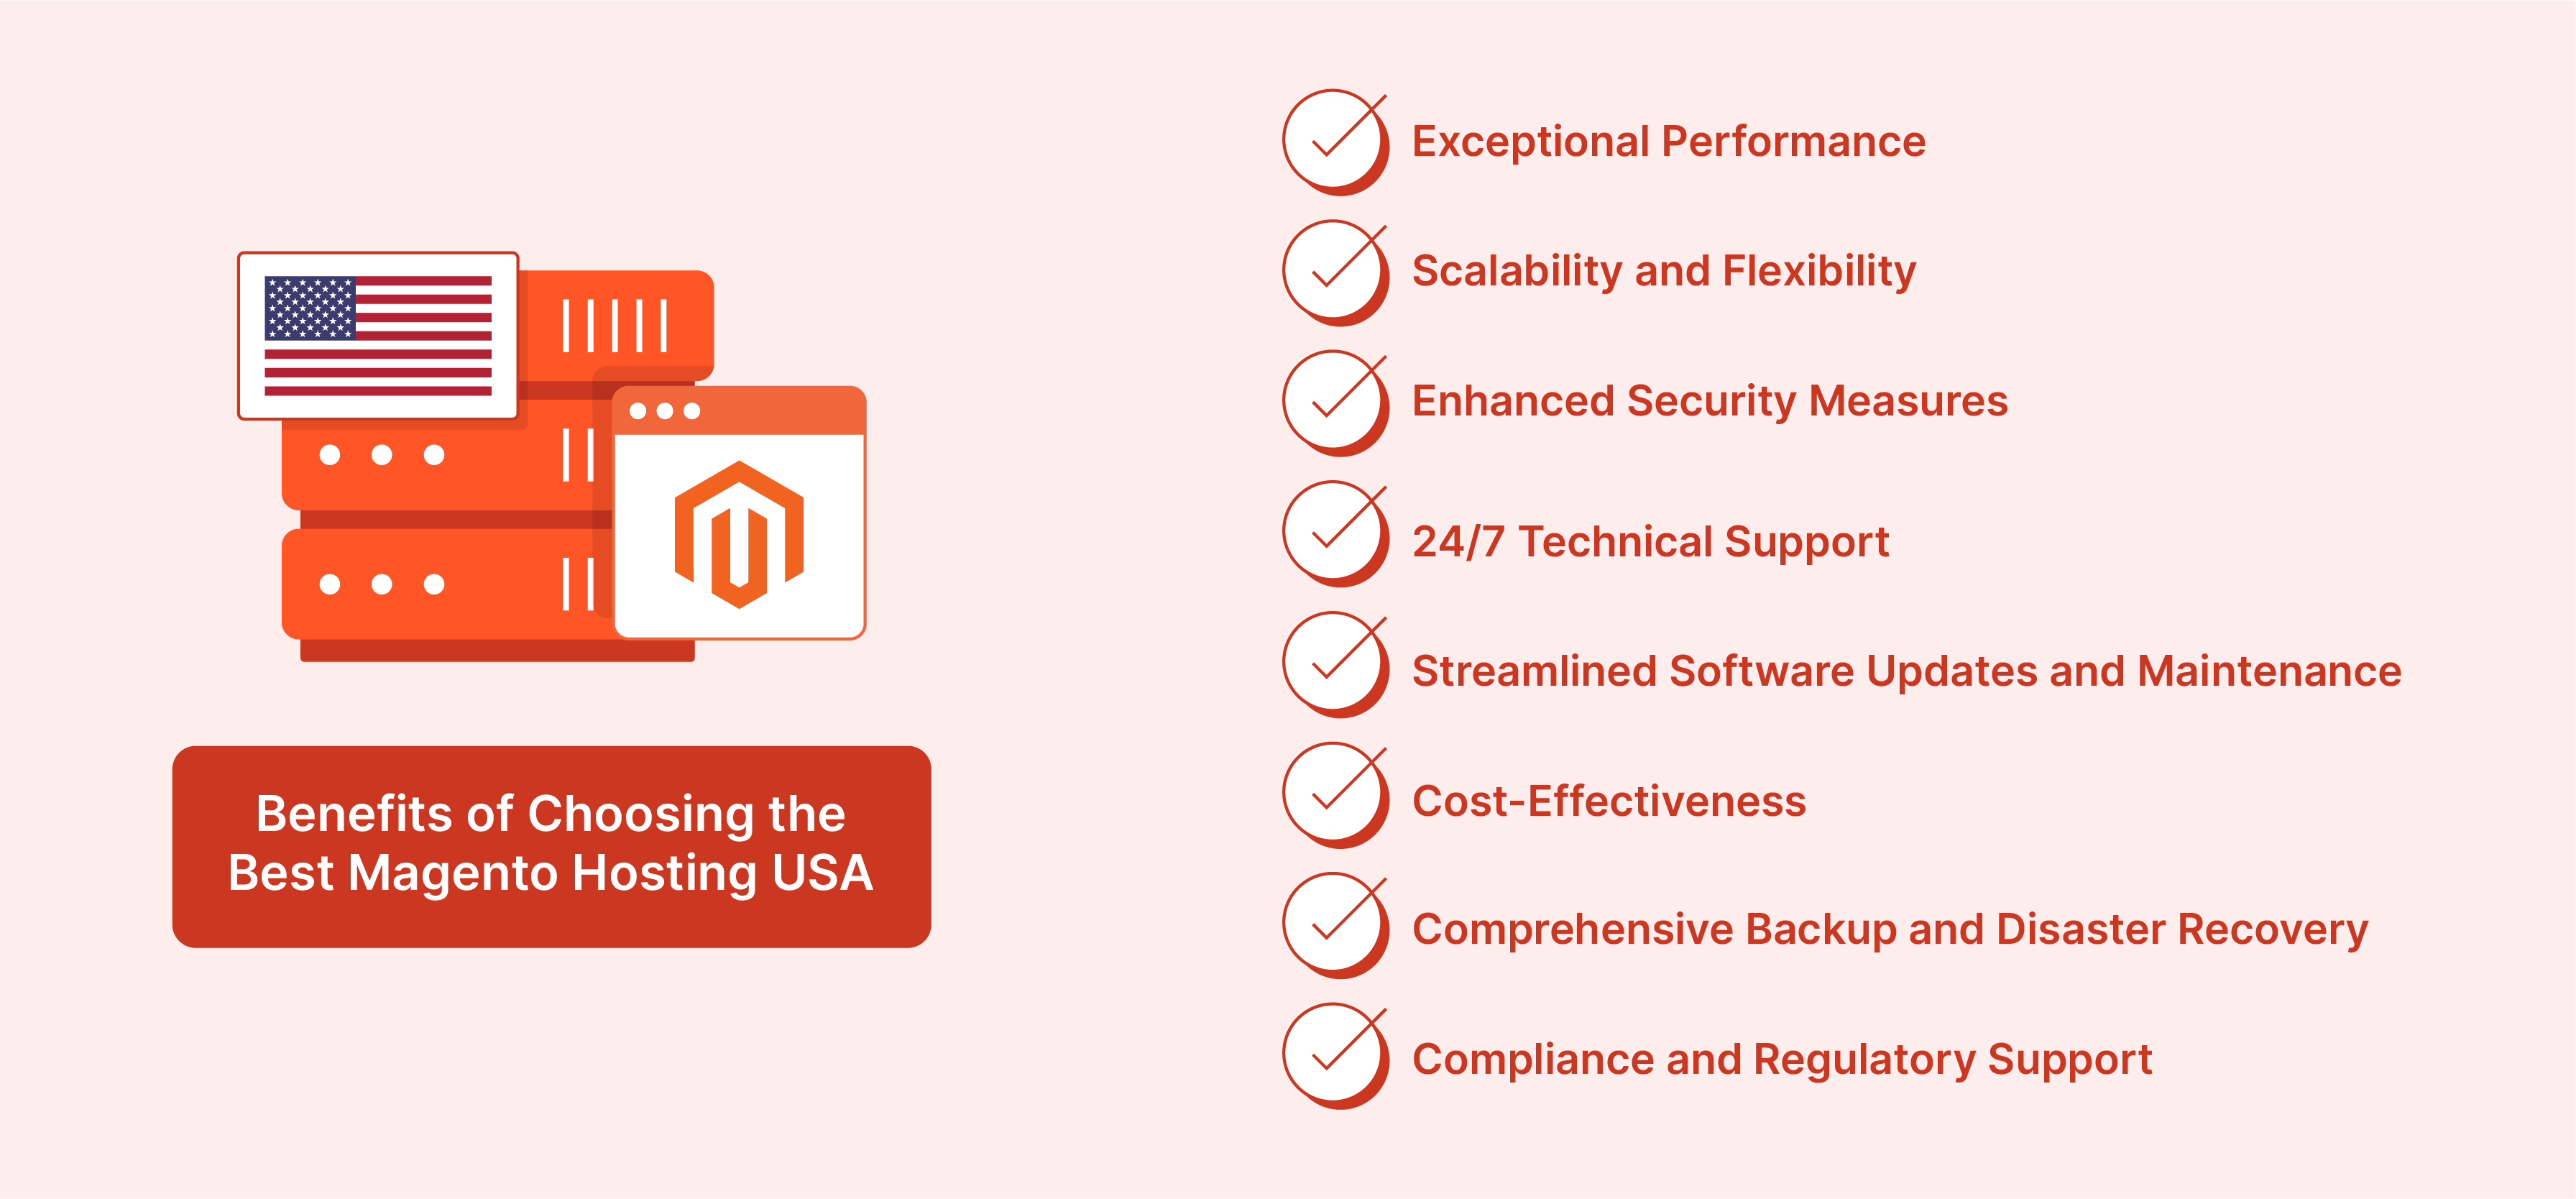 Benefits of Choosing the Best Magento Hosting USAUploading file..._9mrrliuxu
